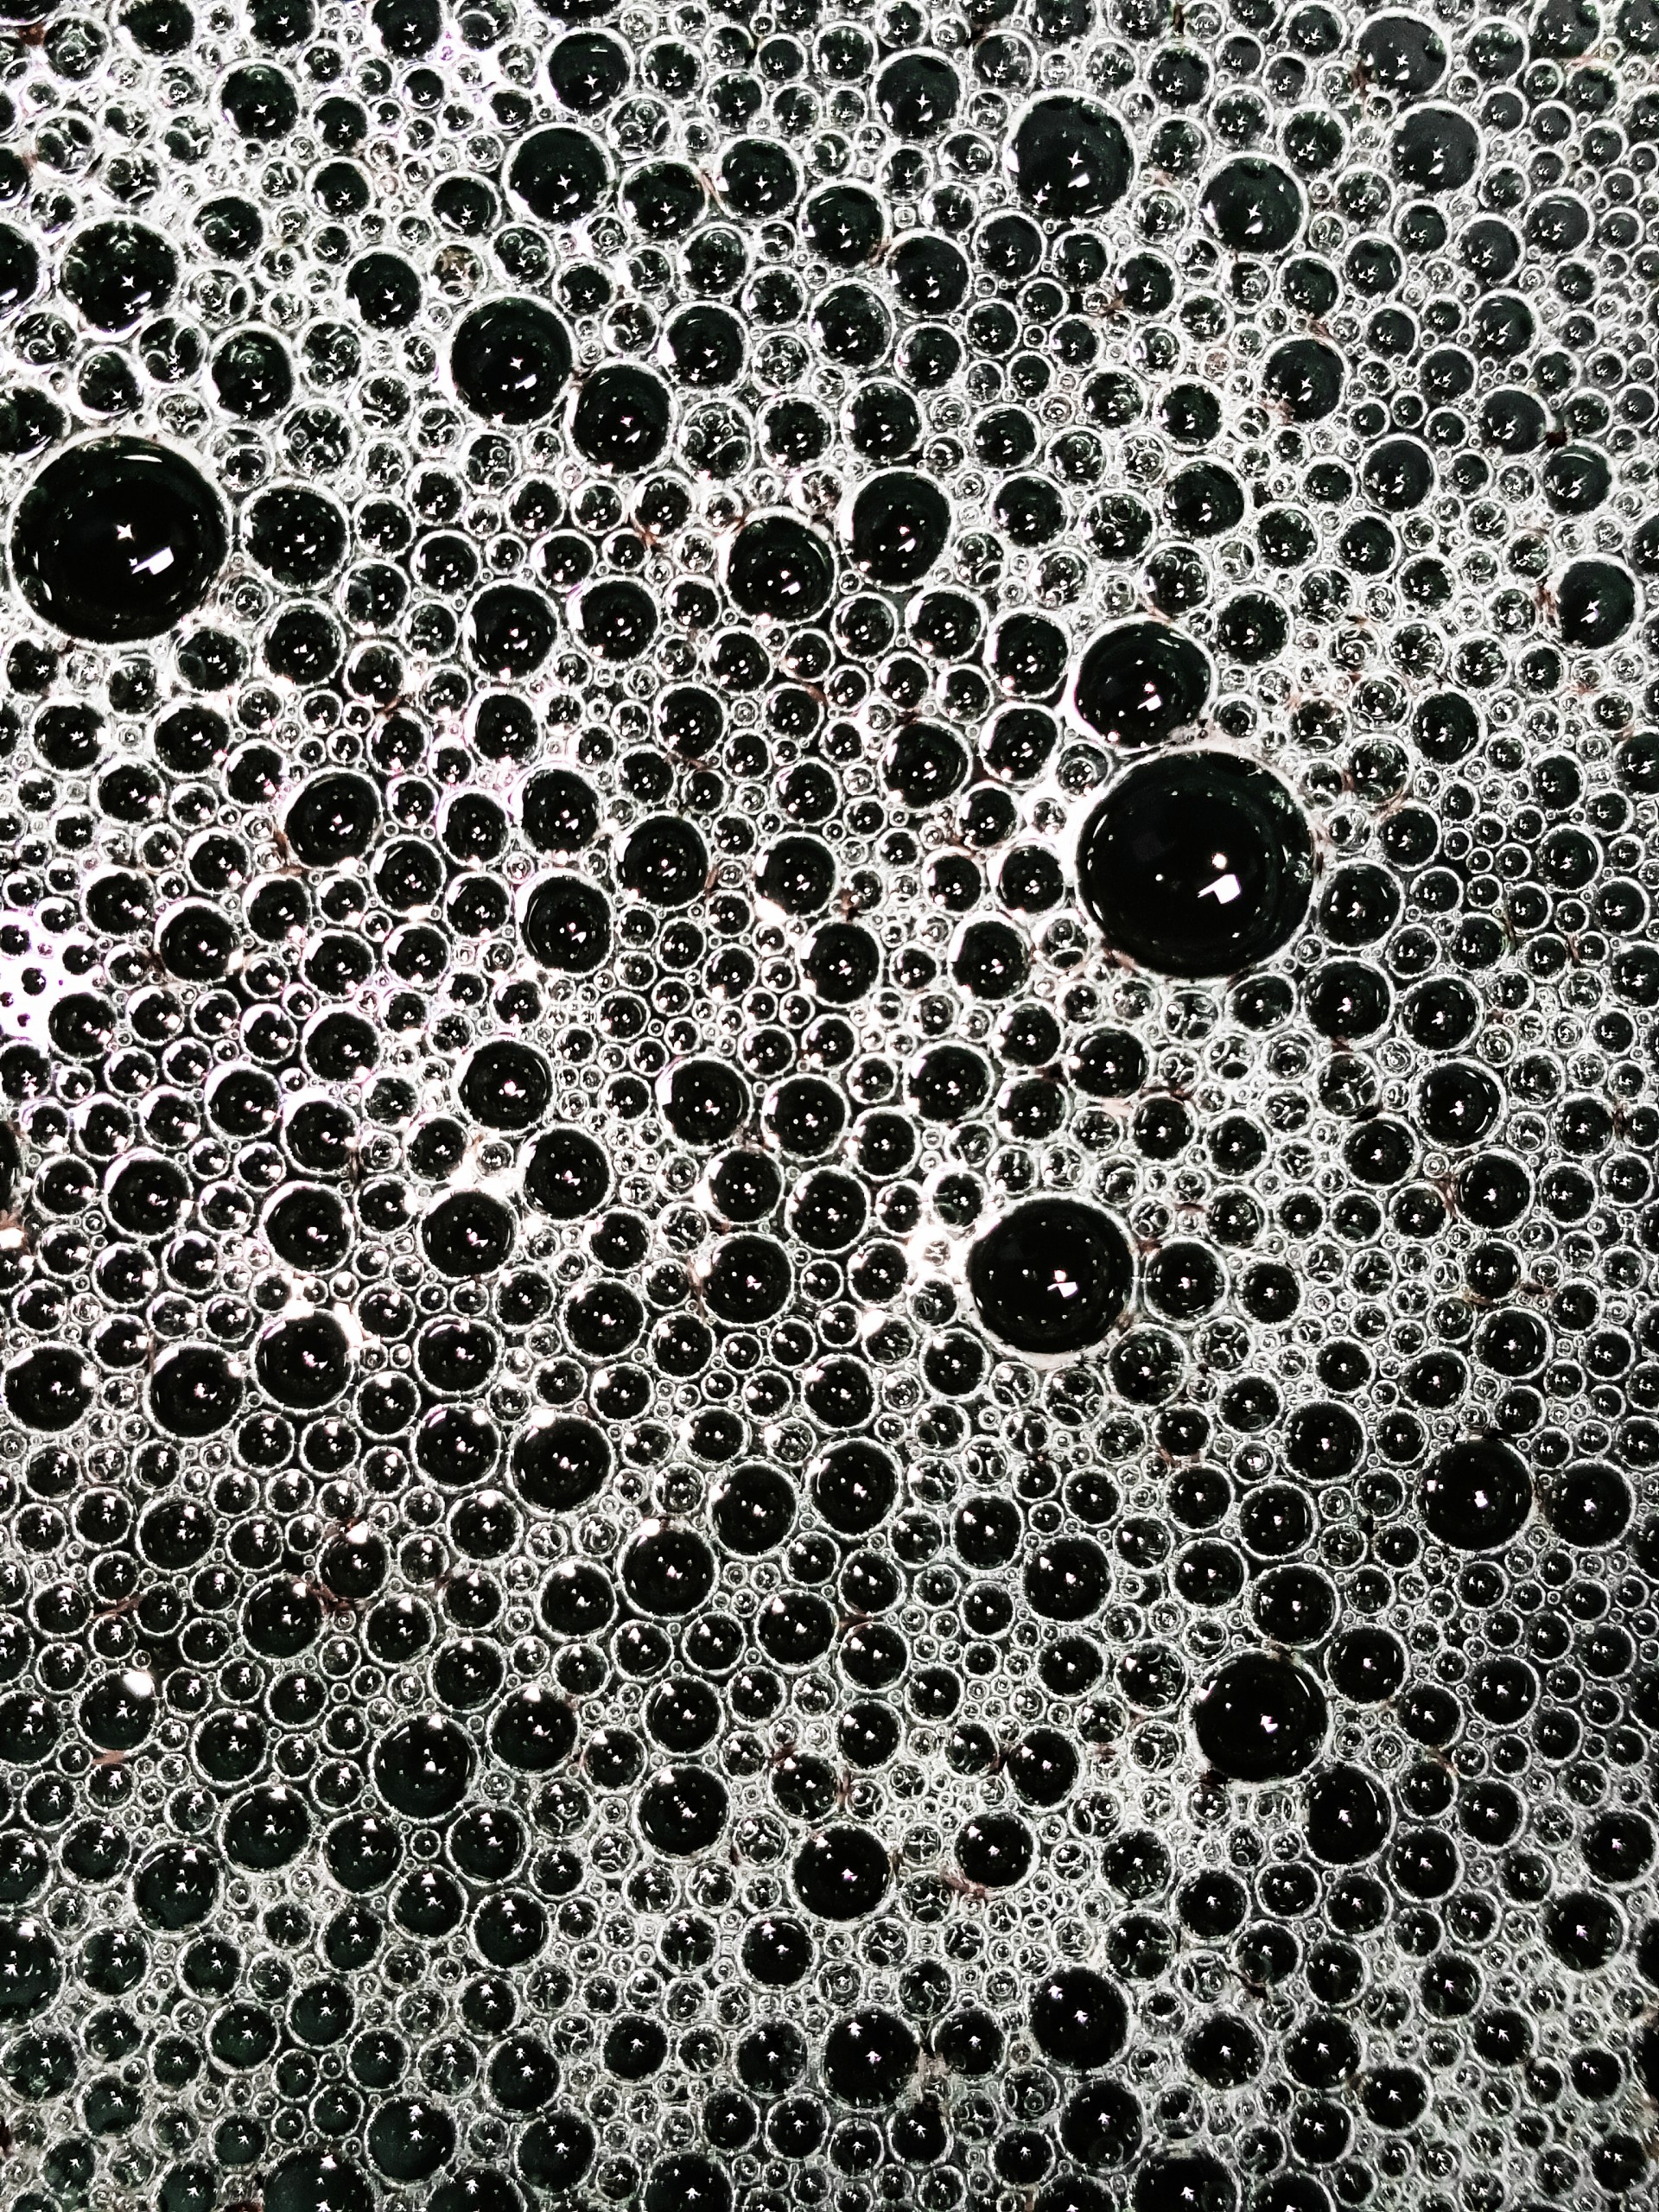 Black and white bubbles